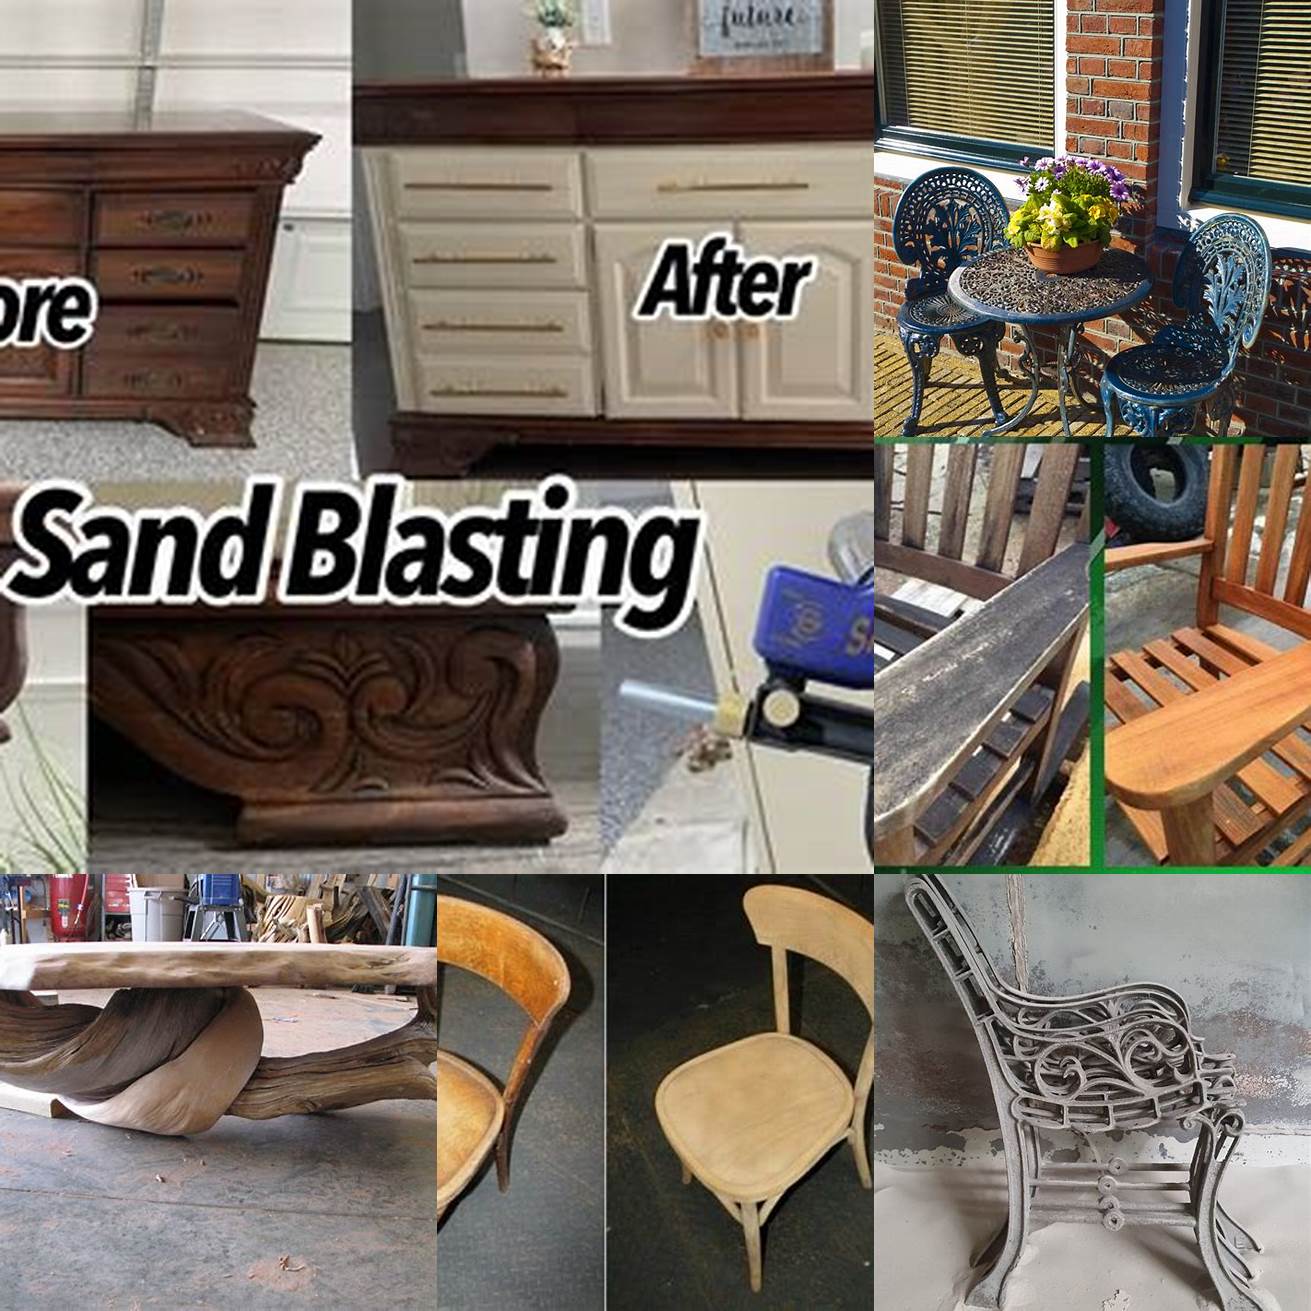 Start sandblasting